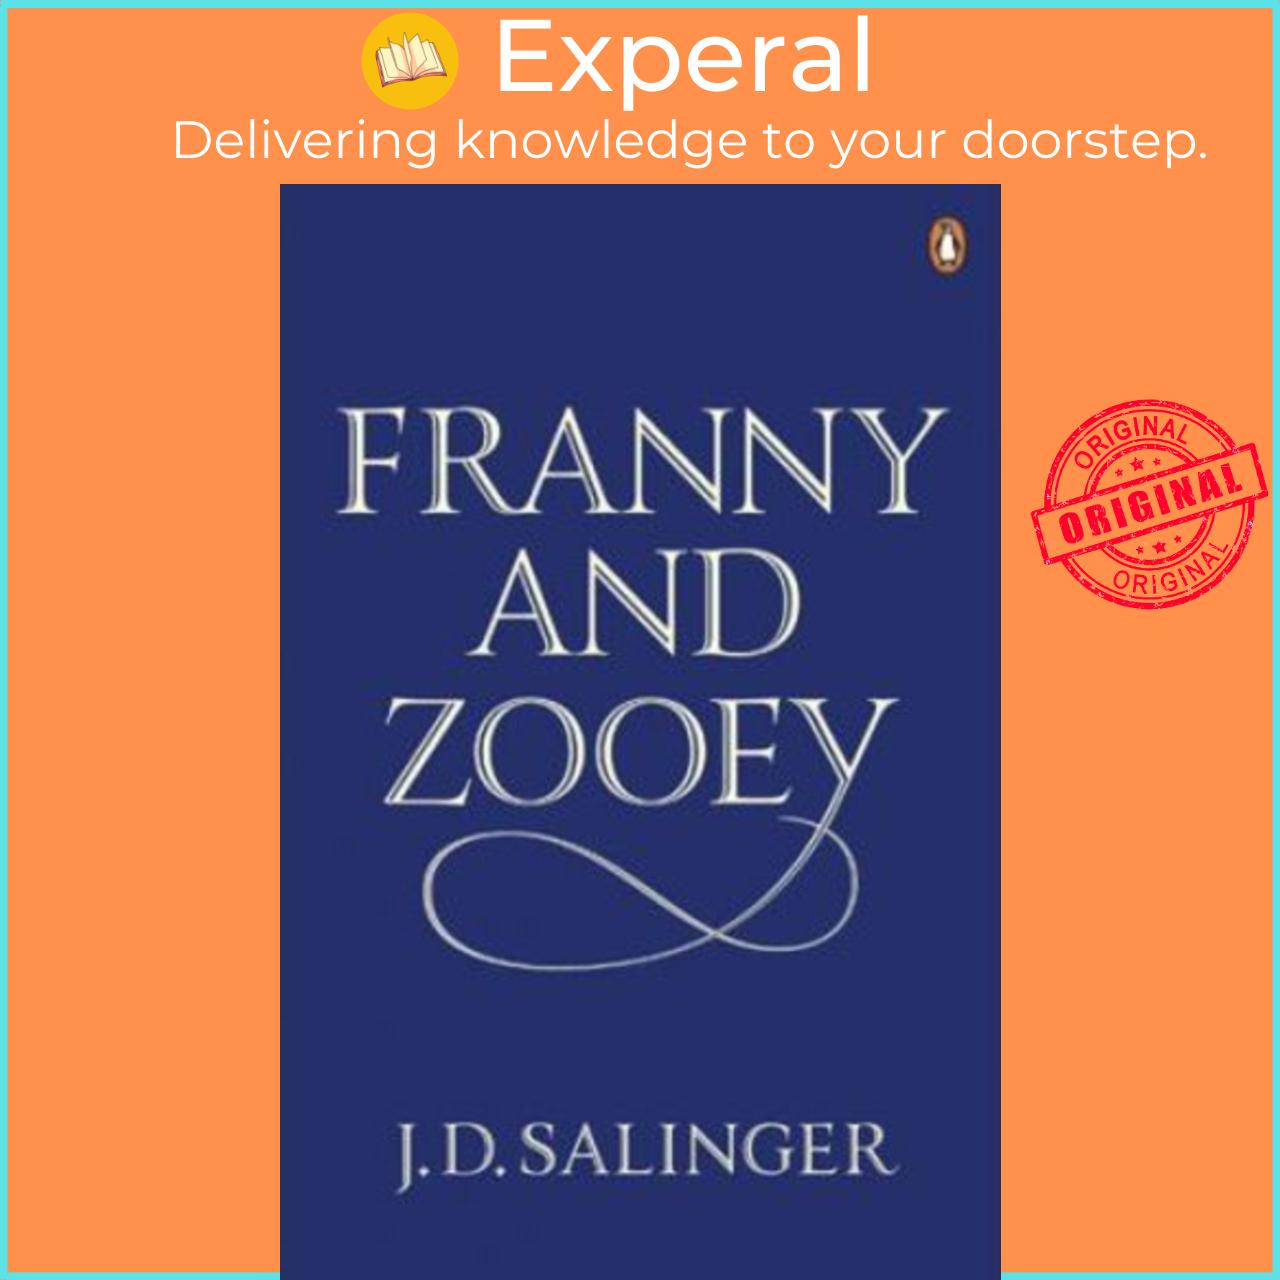 Sách - Franny and Zooey by J. D. Salinger (UK edition, paperback)